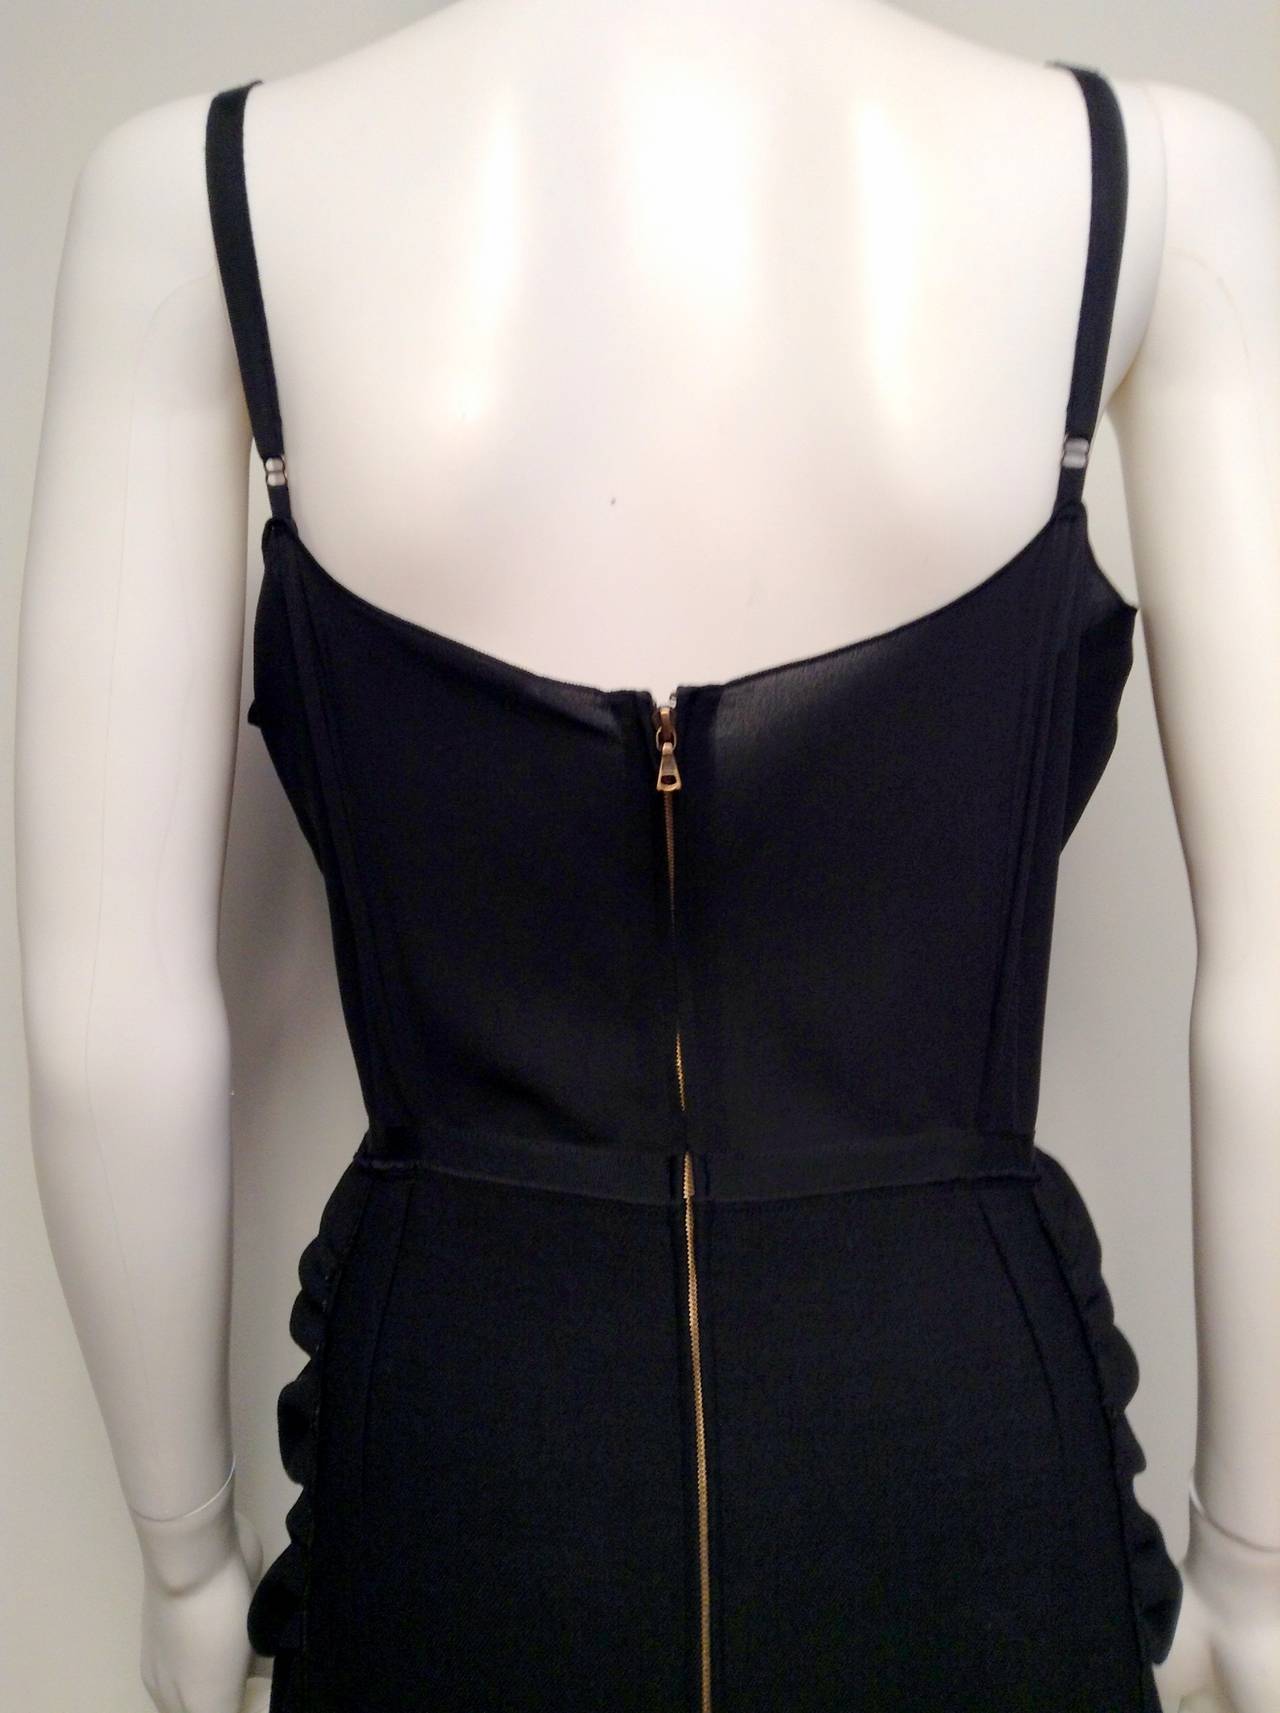 Nina Ricci Black Cocktail Dress Size 42/10 2012 For Sale 3